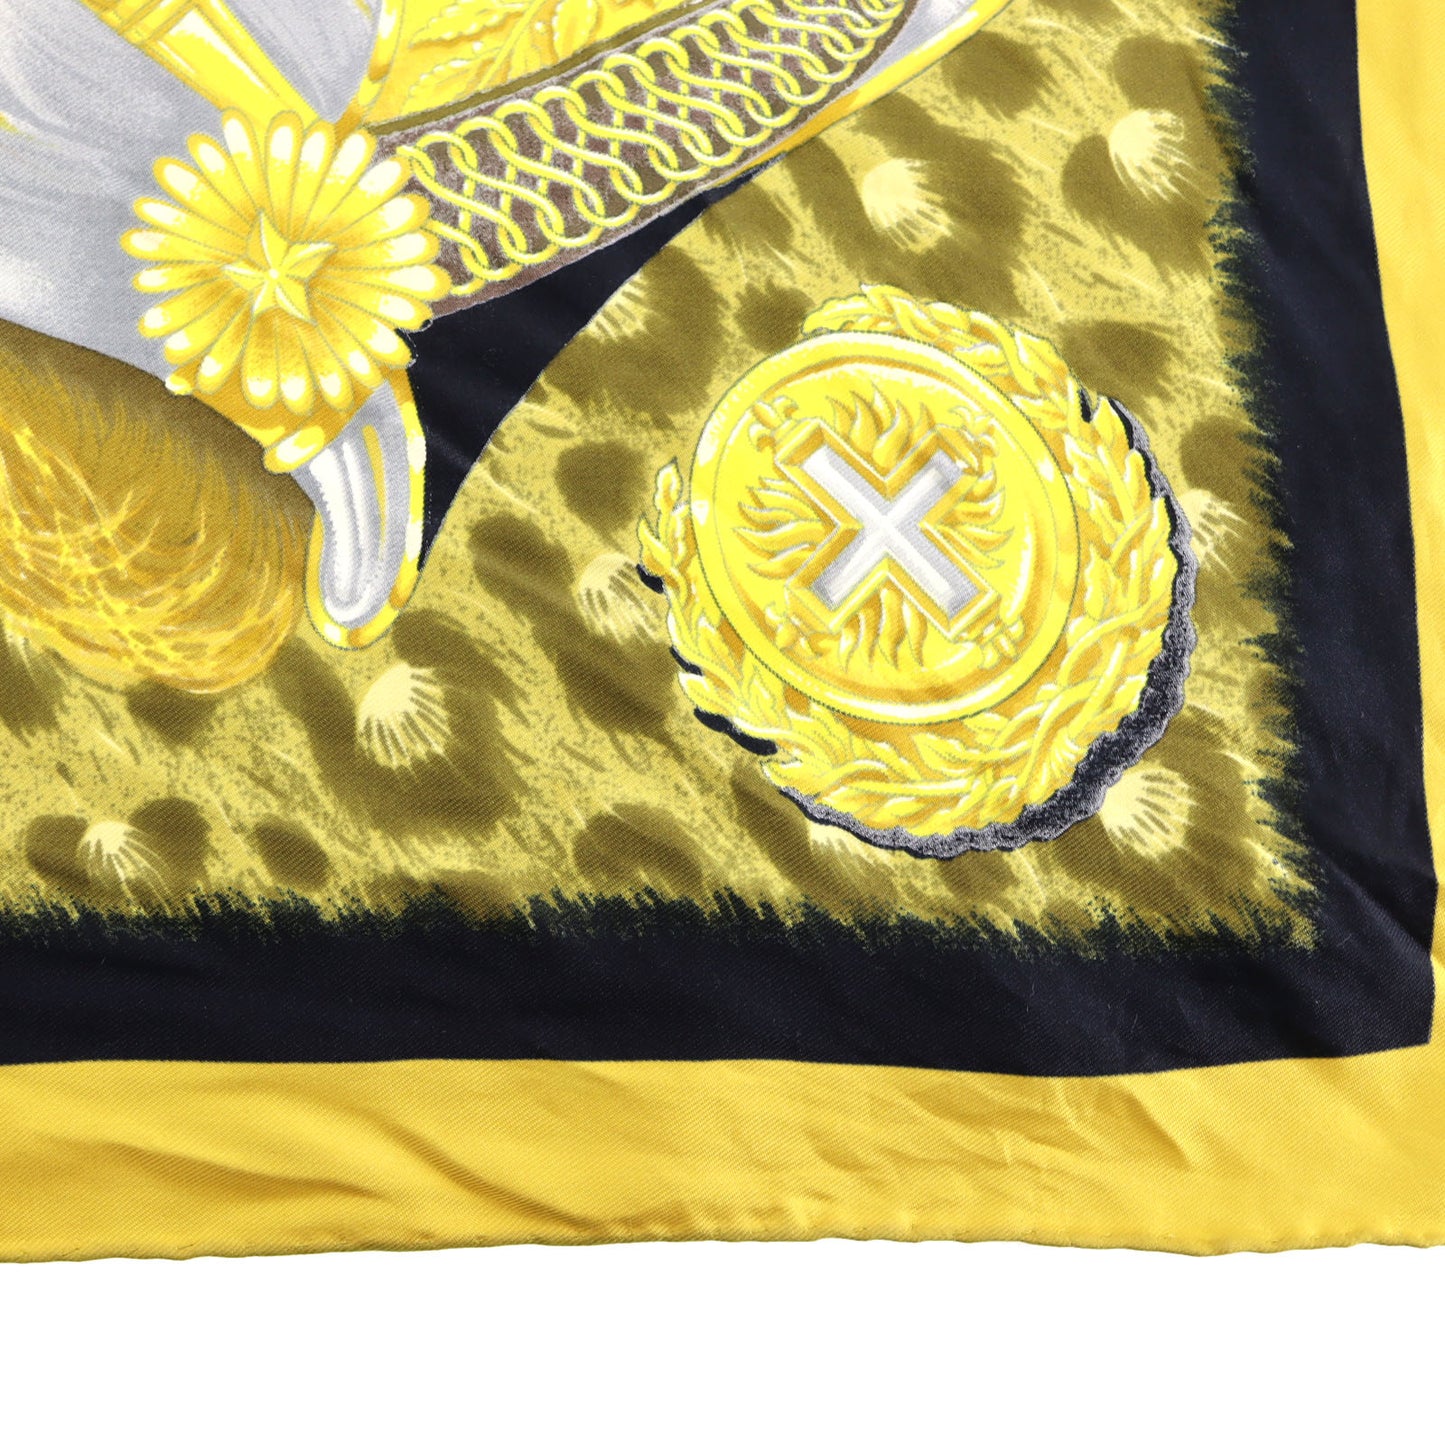 HERMES Logos Scarf Yellow Black 100% Silk #BY468